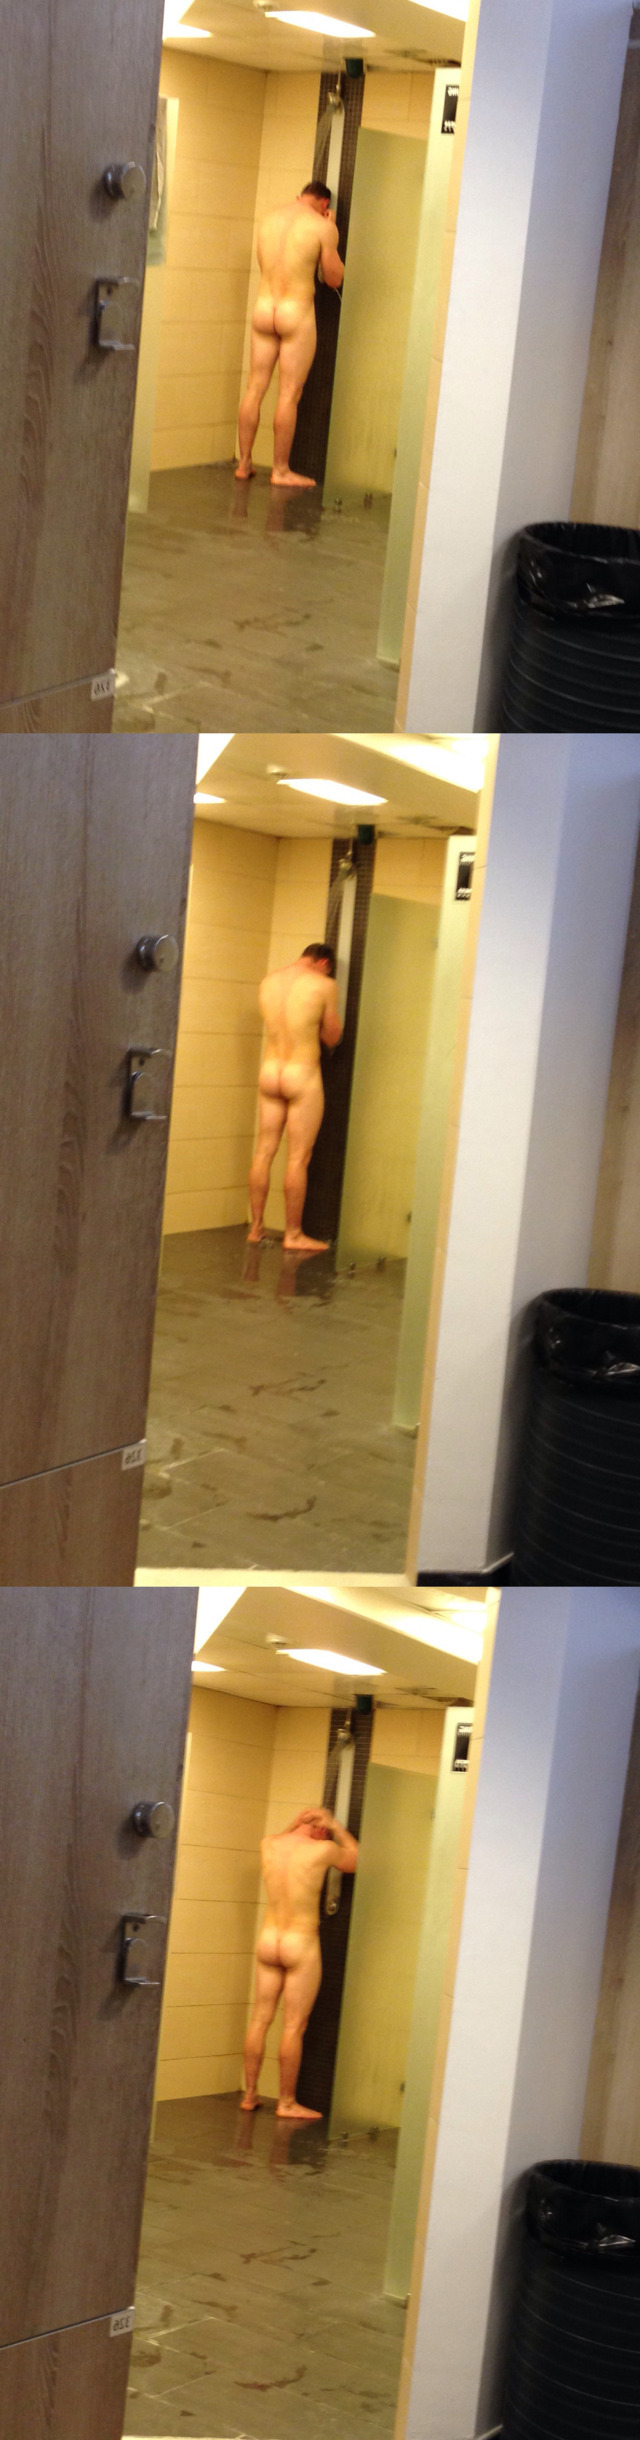 man taking shower spycamfromguys